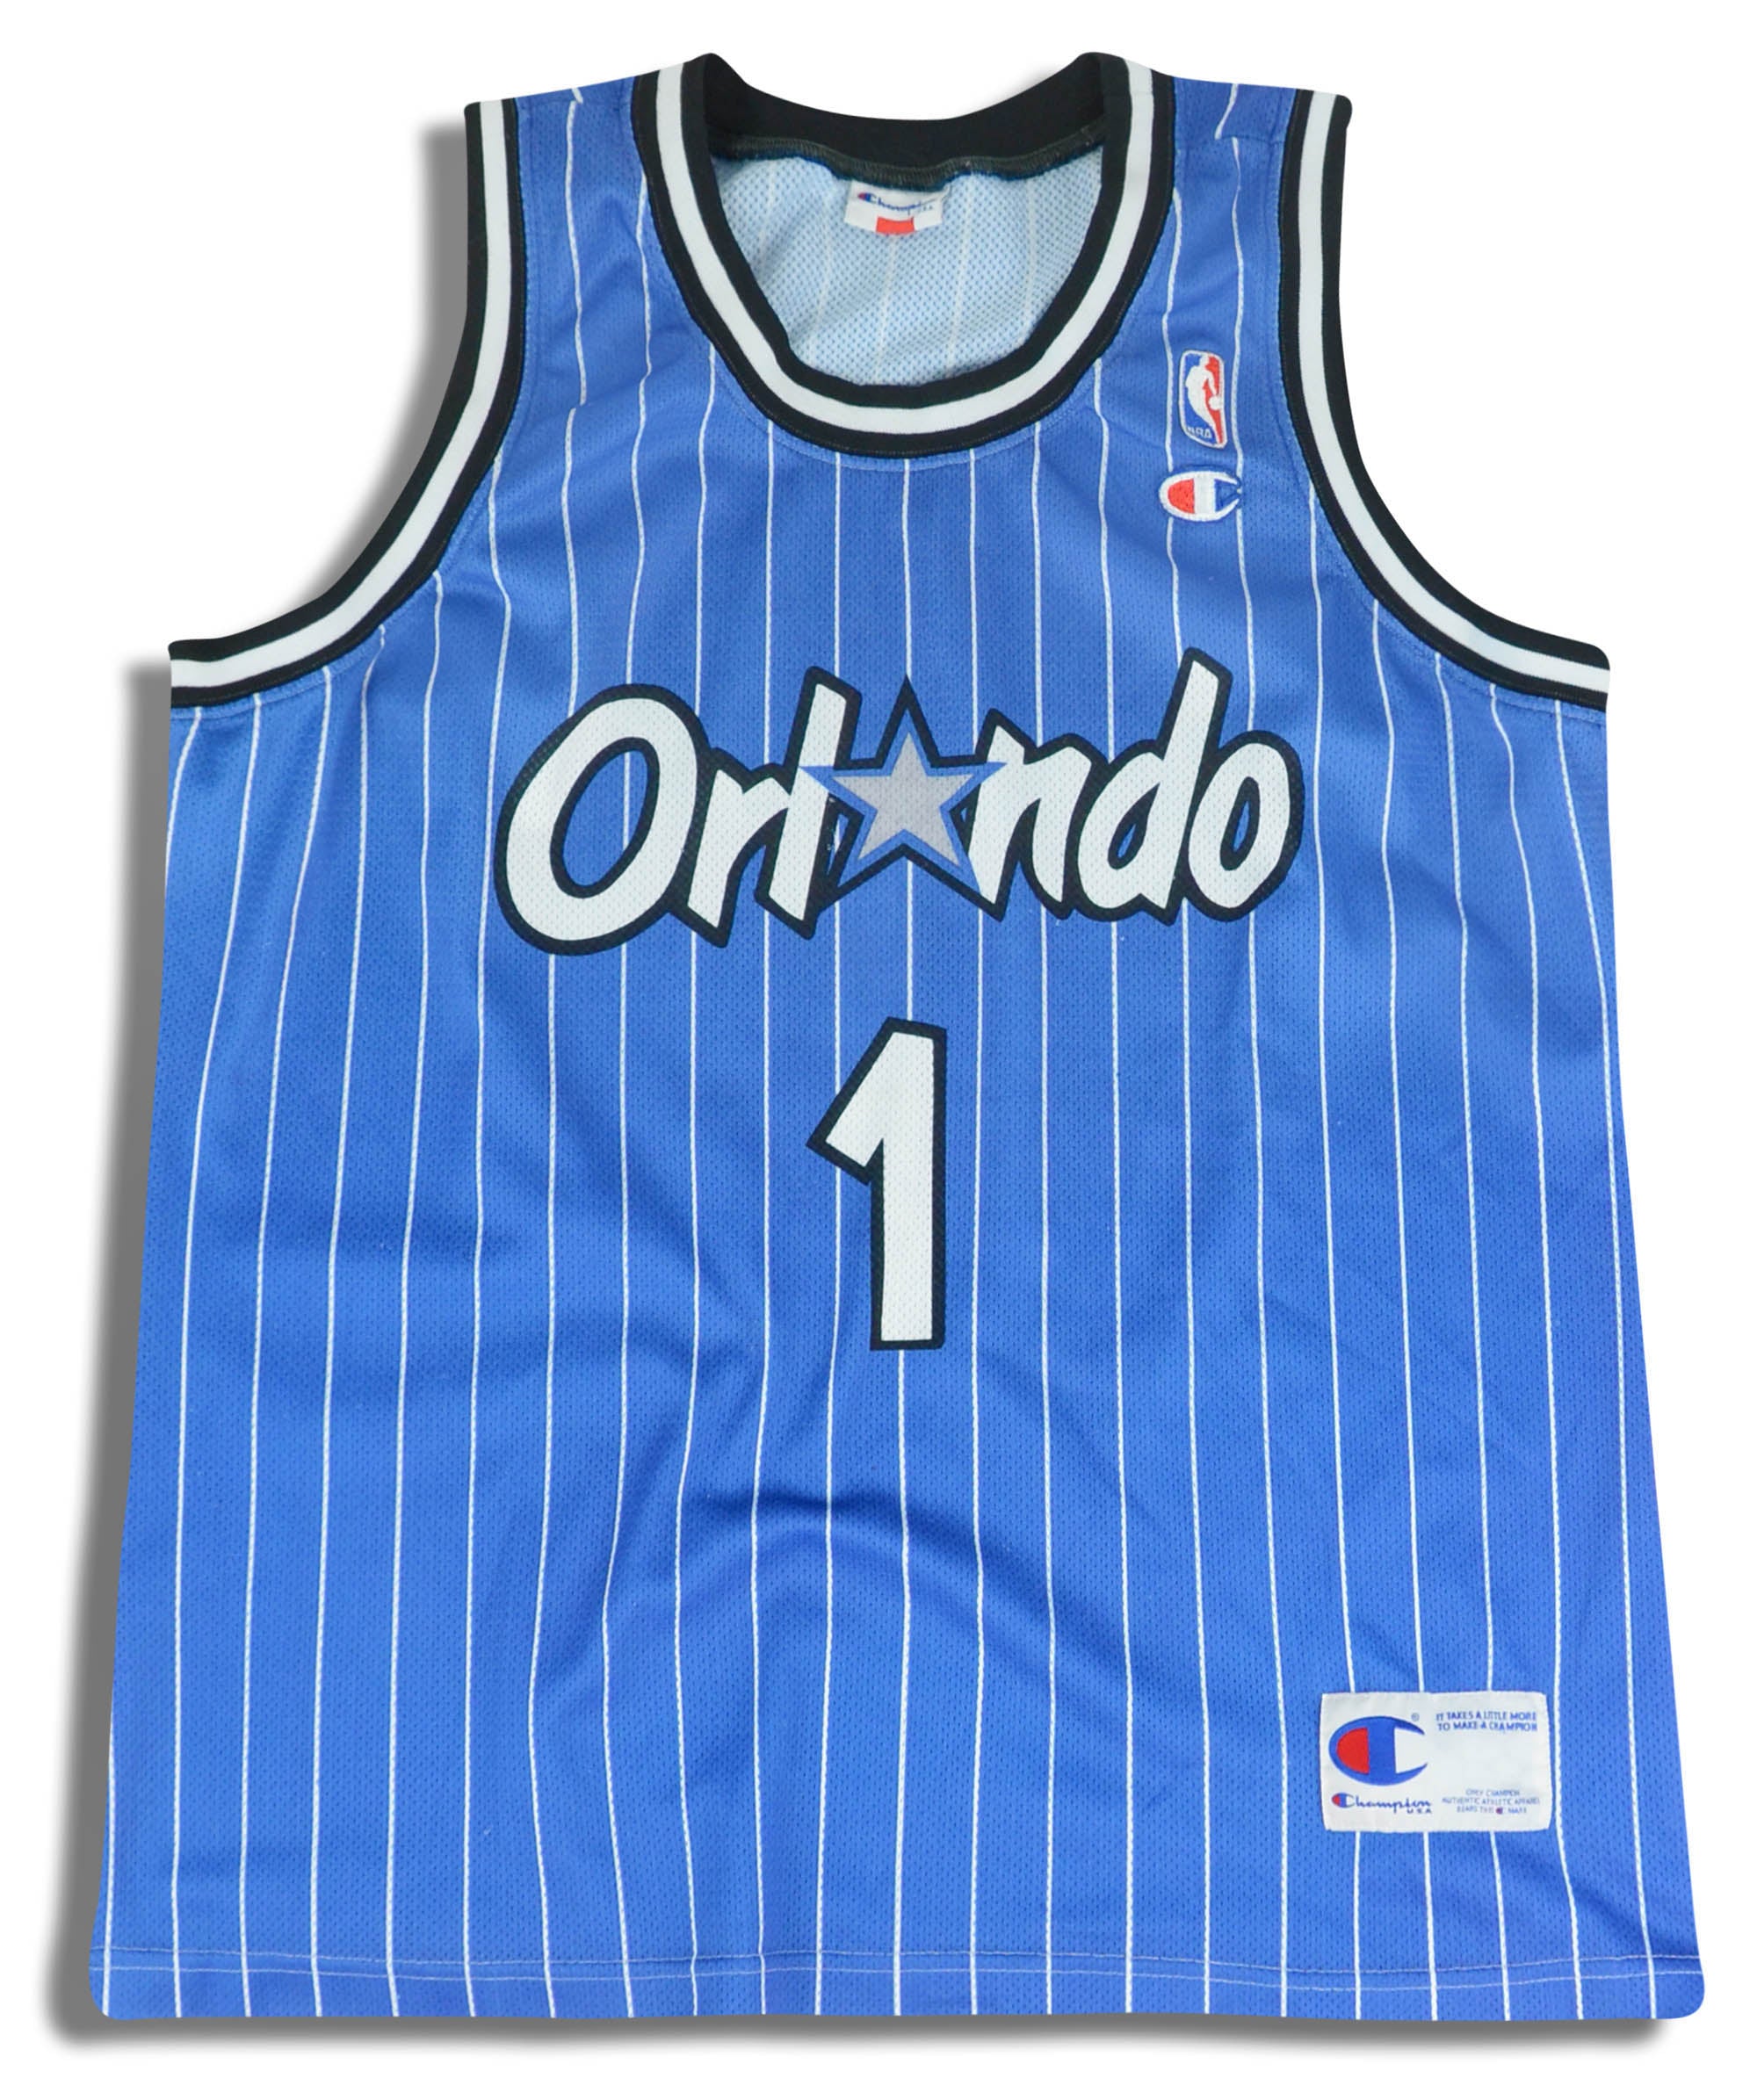 Vintage Orlando Magic Penny Hardaway Basketball Jersey